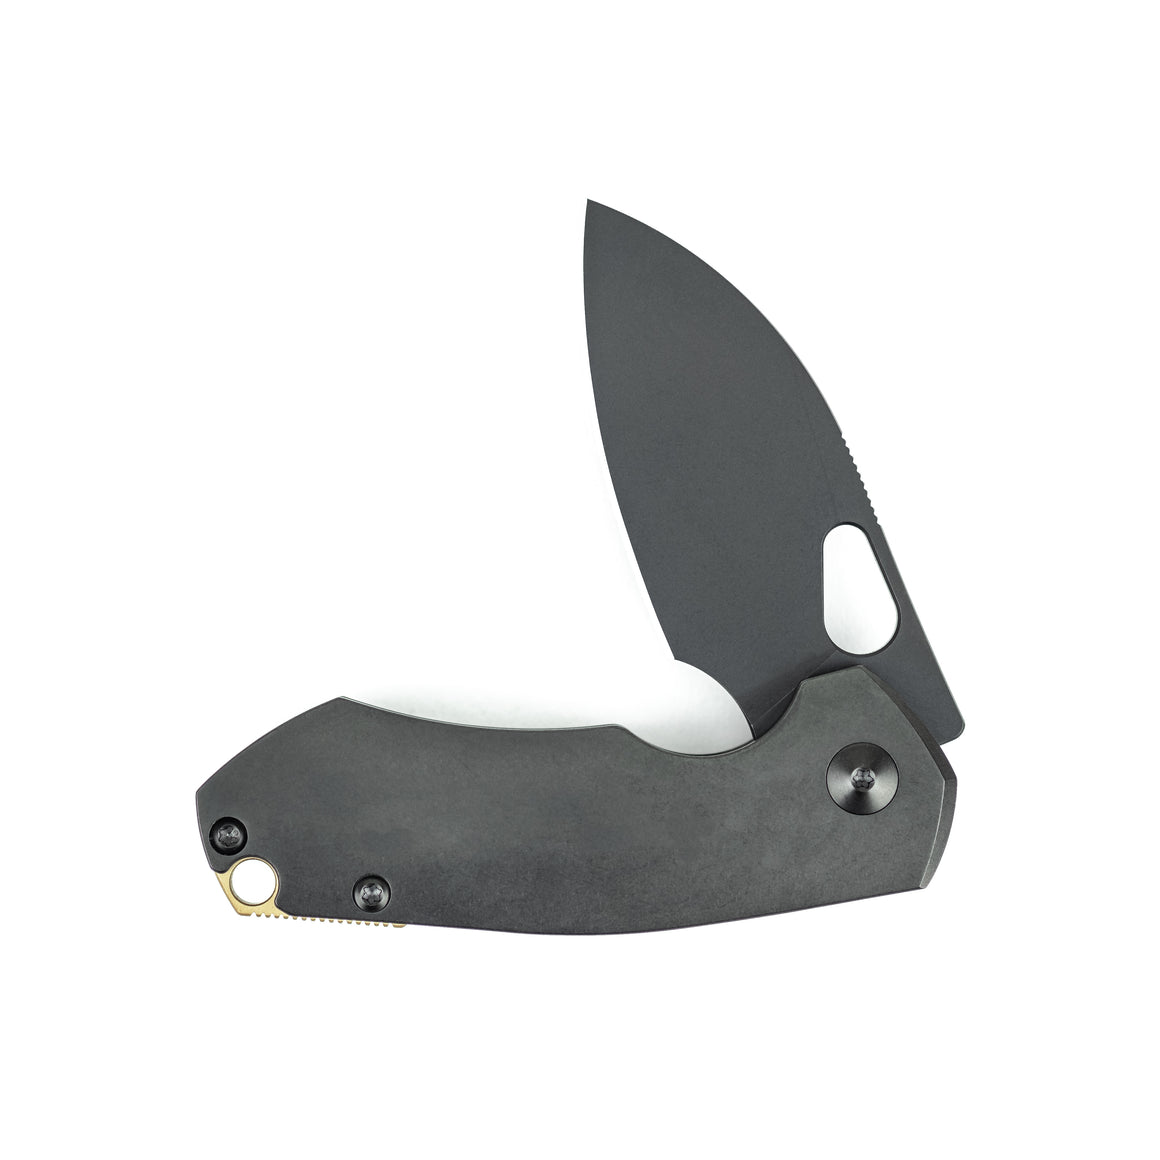 ACE Riv - Titanium Blackout - EDC knife - PVD Finish blade steel